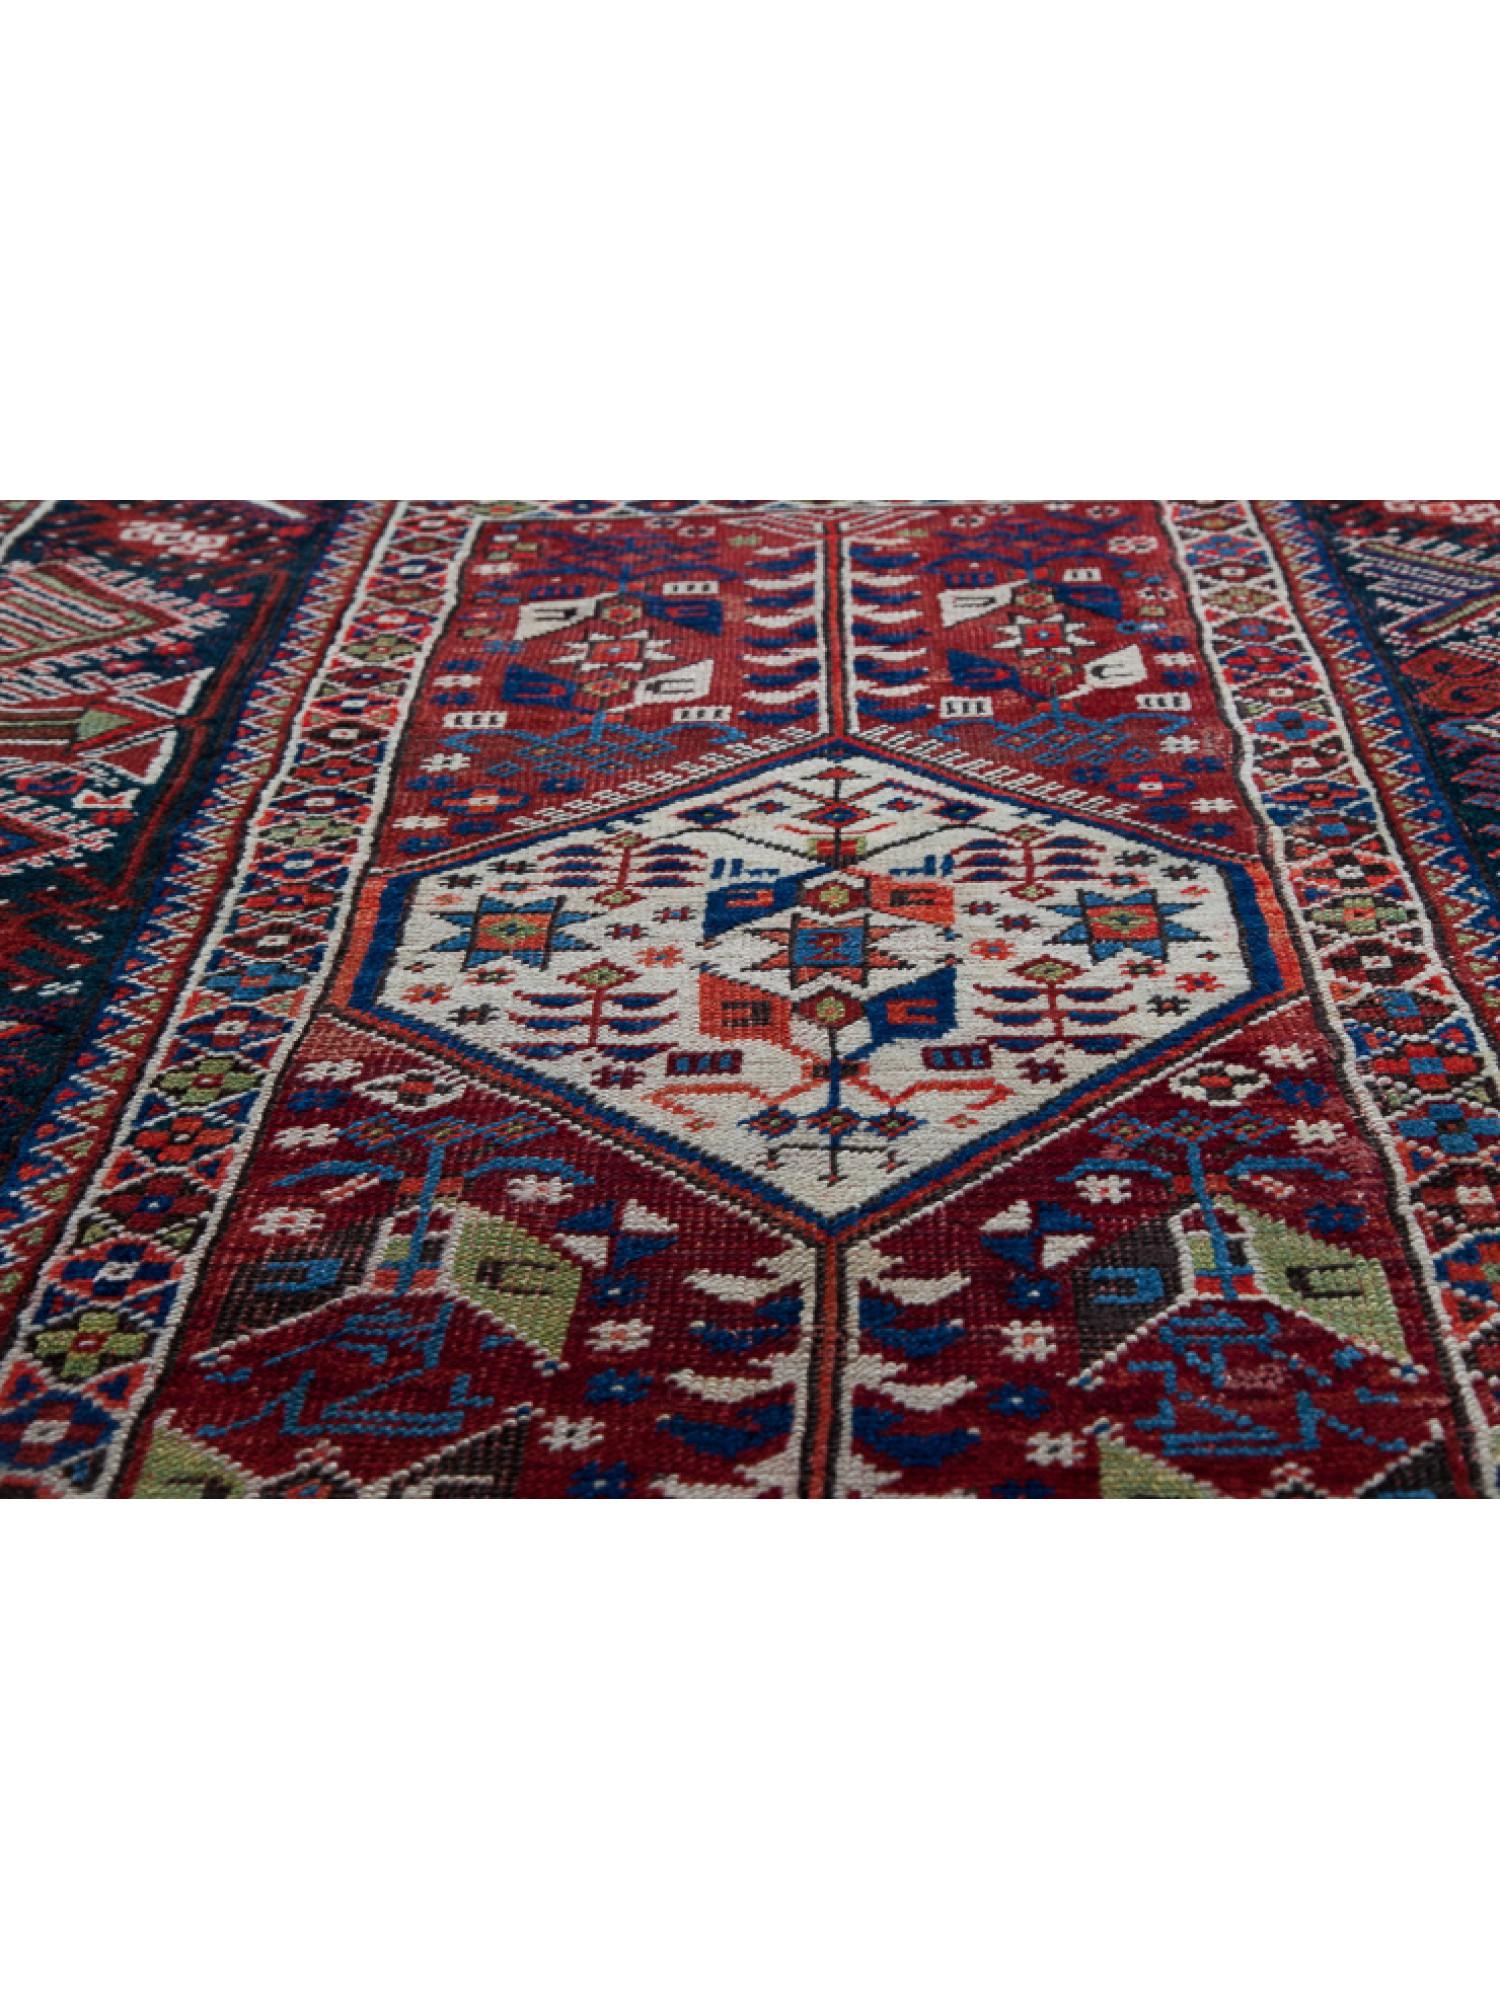 Hand-Woven Antique Antalya Dosemealti Rug Southern Turkish Carpet For Sale